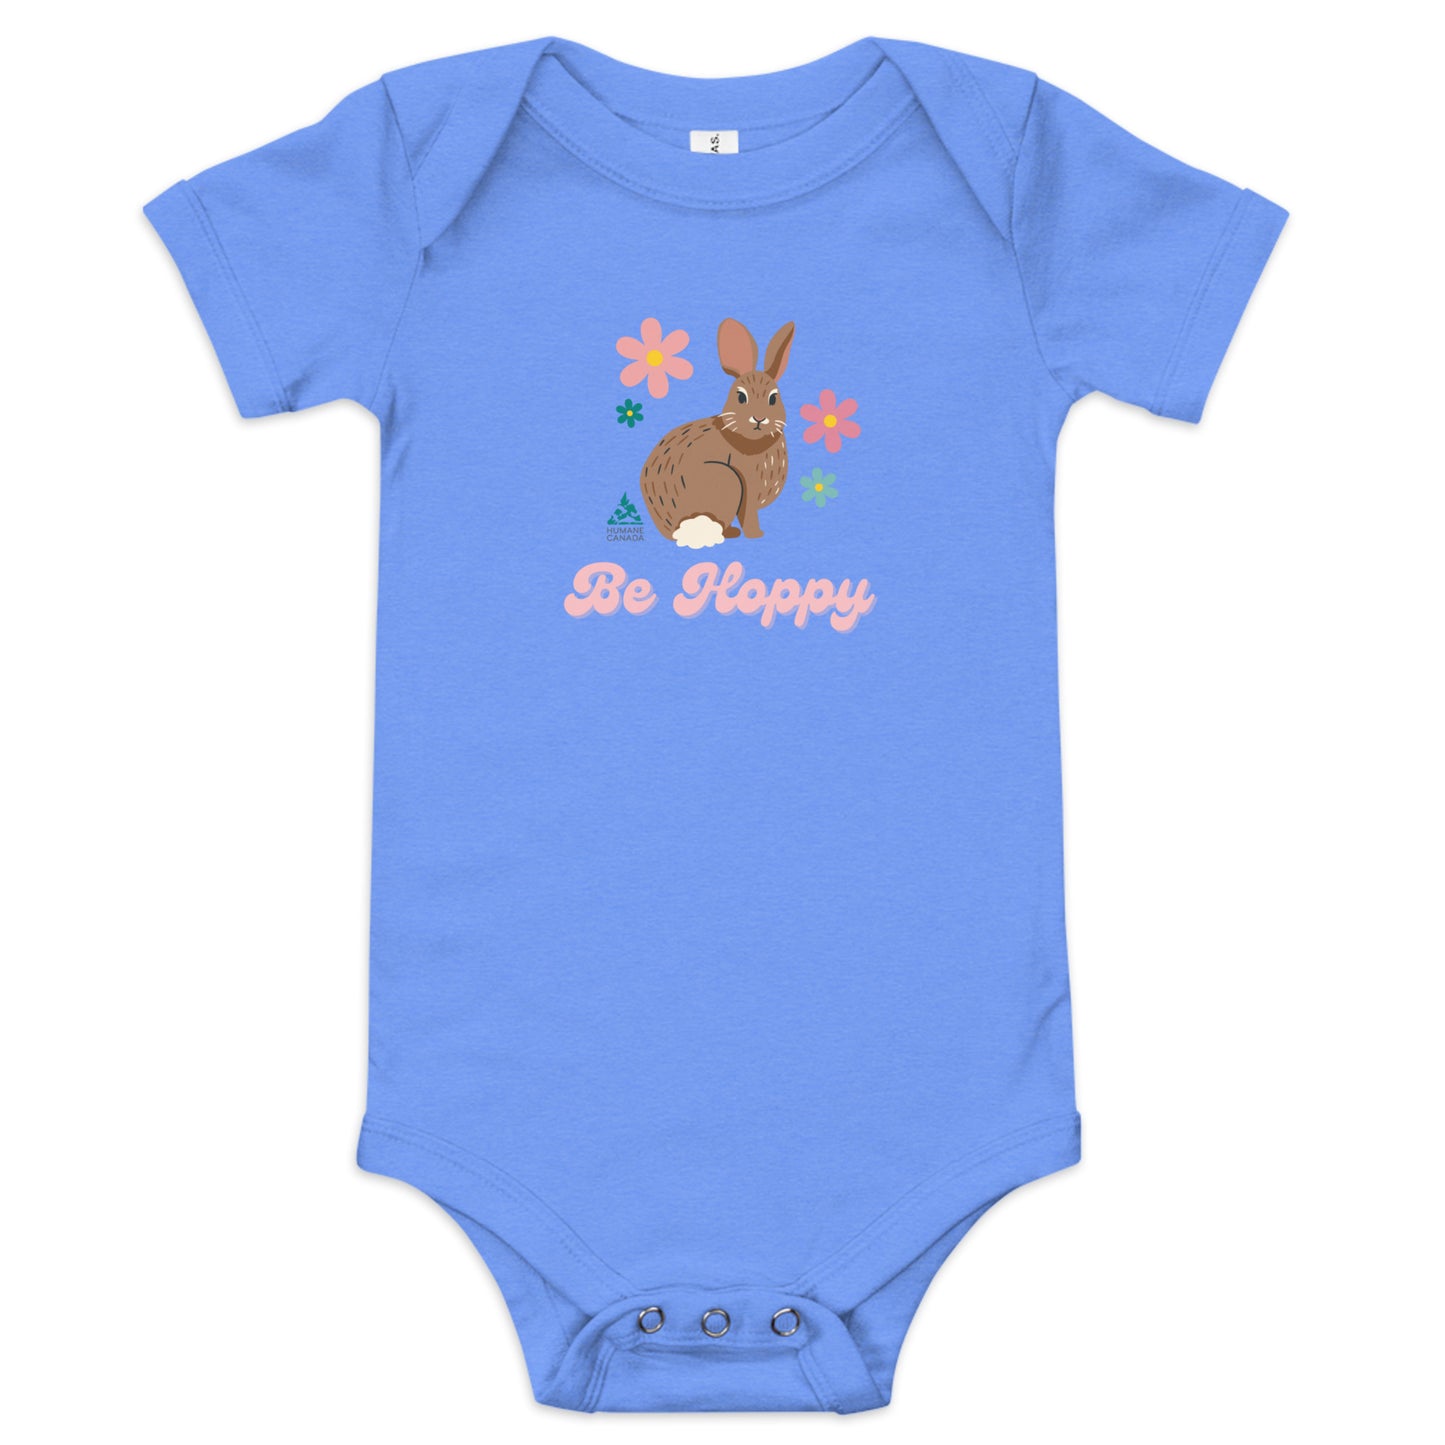 Be Hoppy - Baby short sleeve one piece